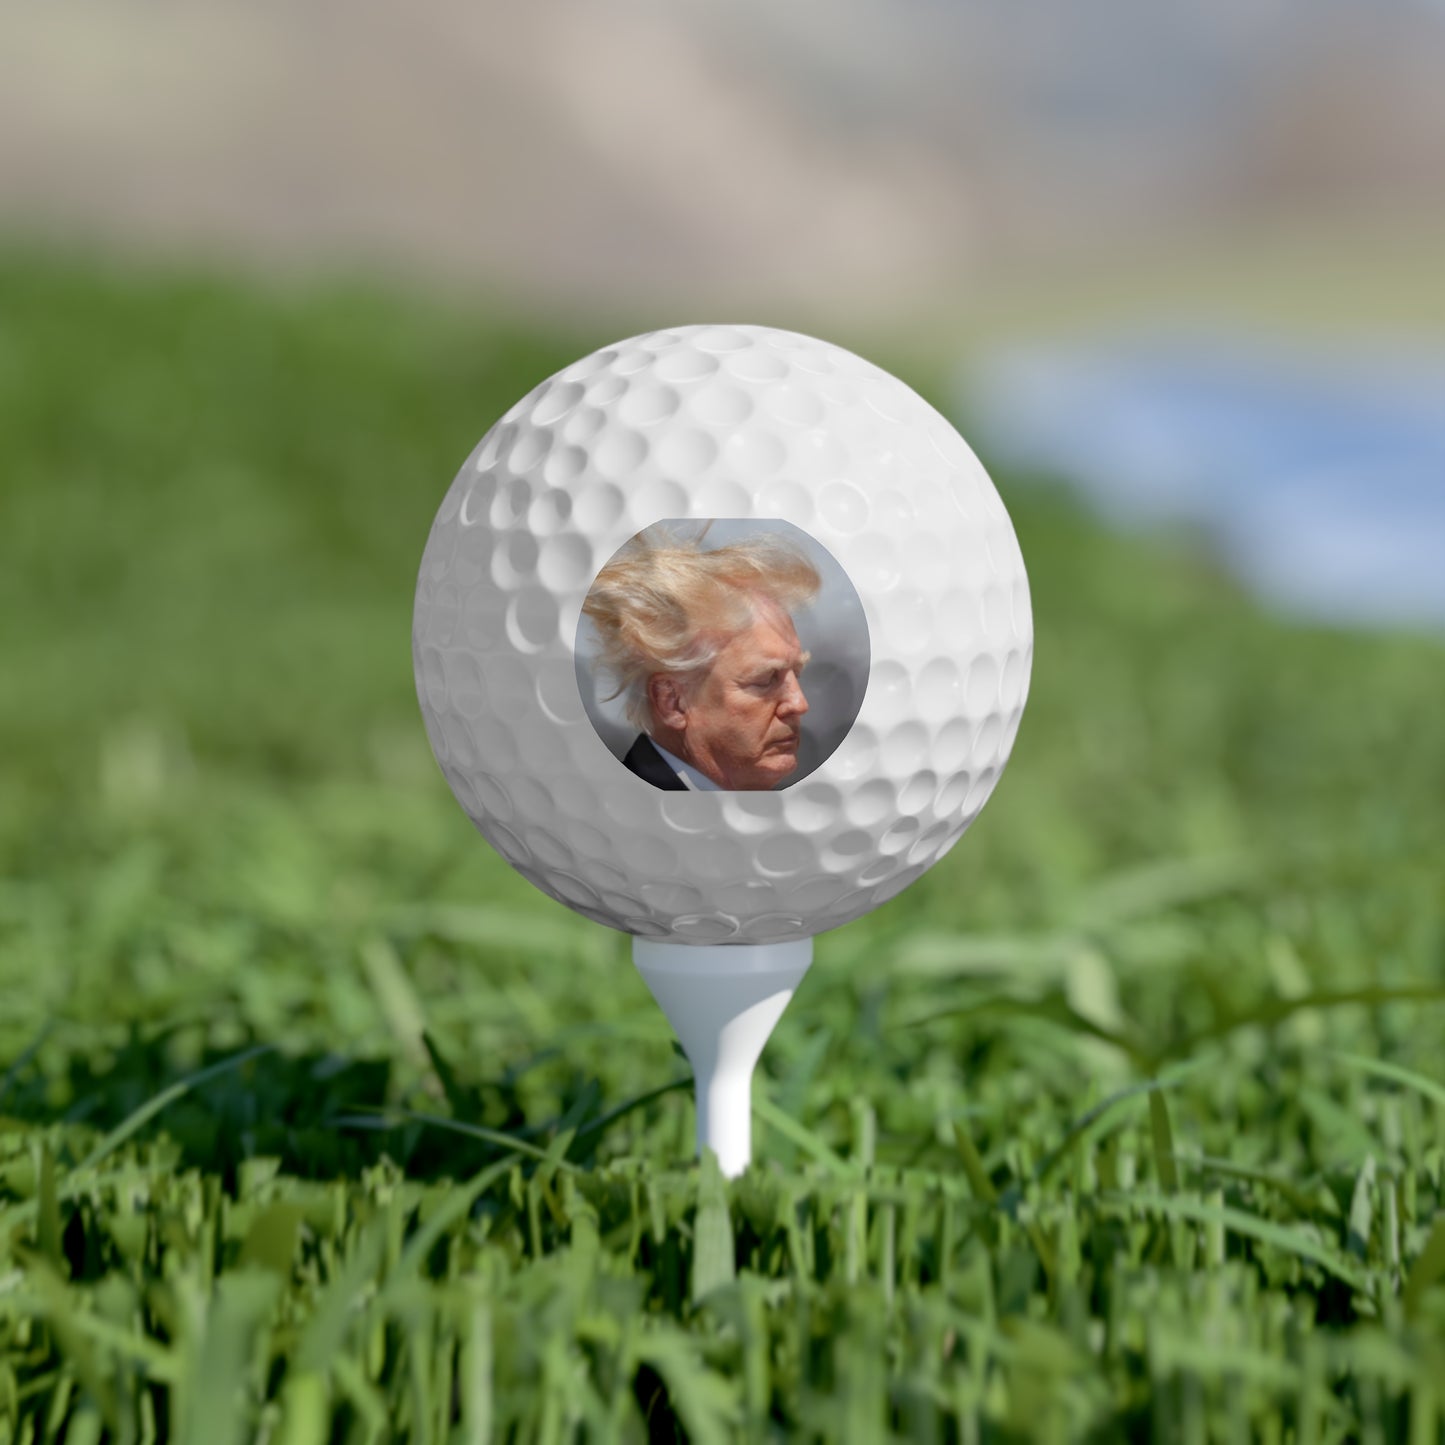 Presidential Golf ball set